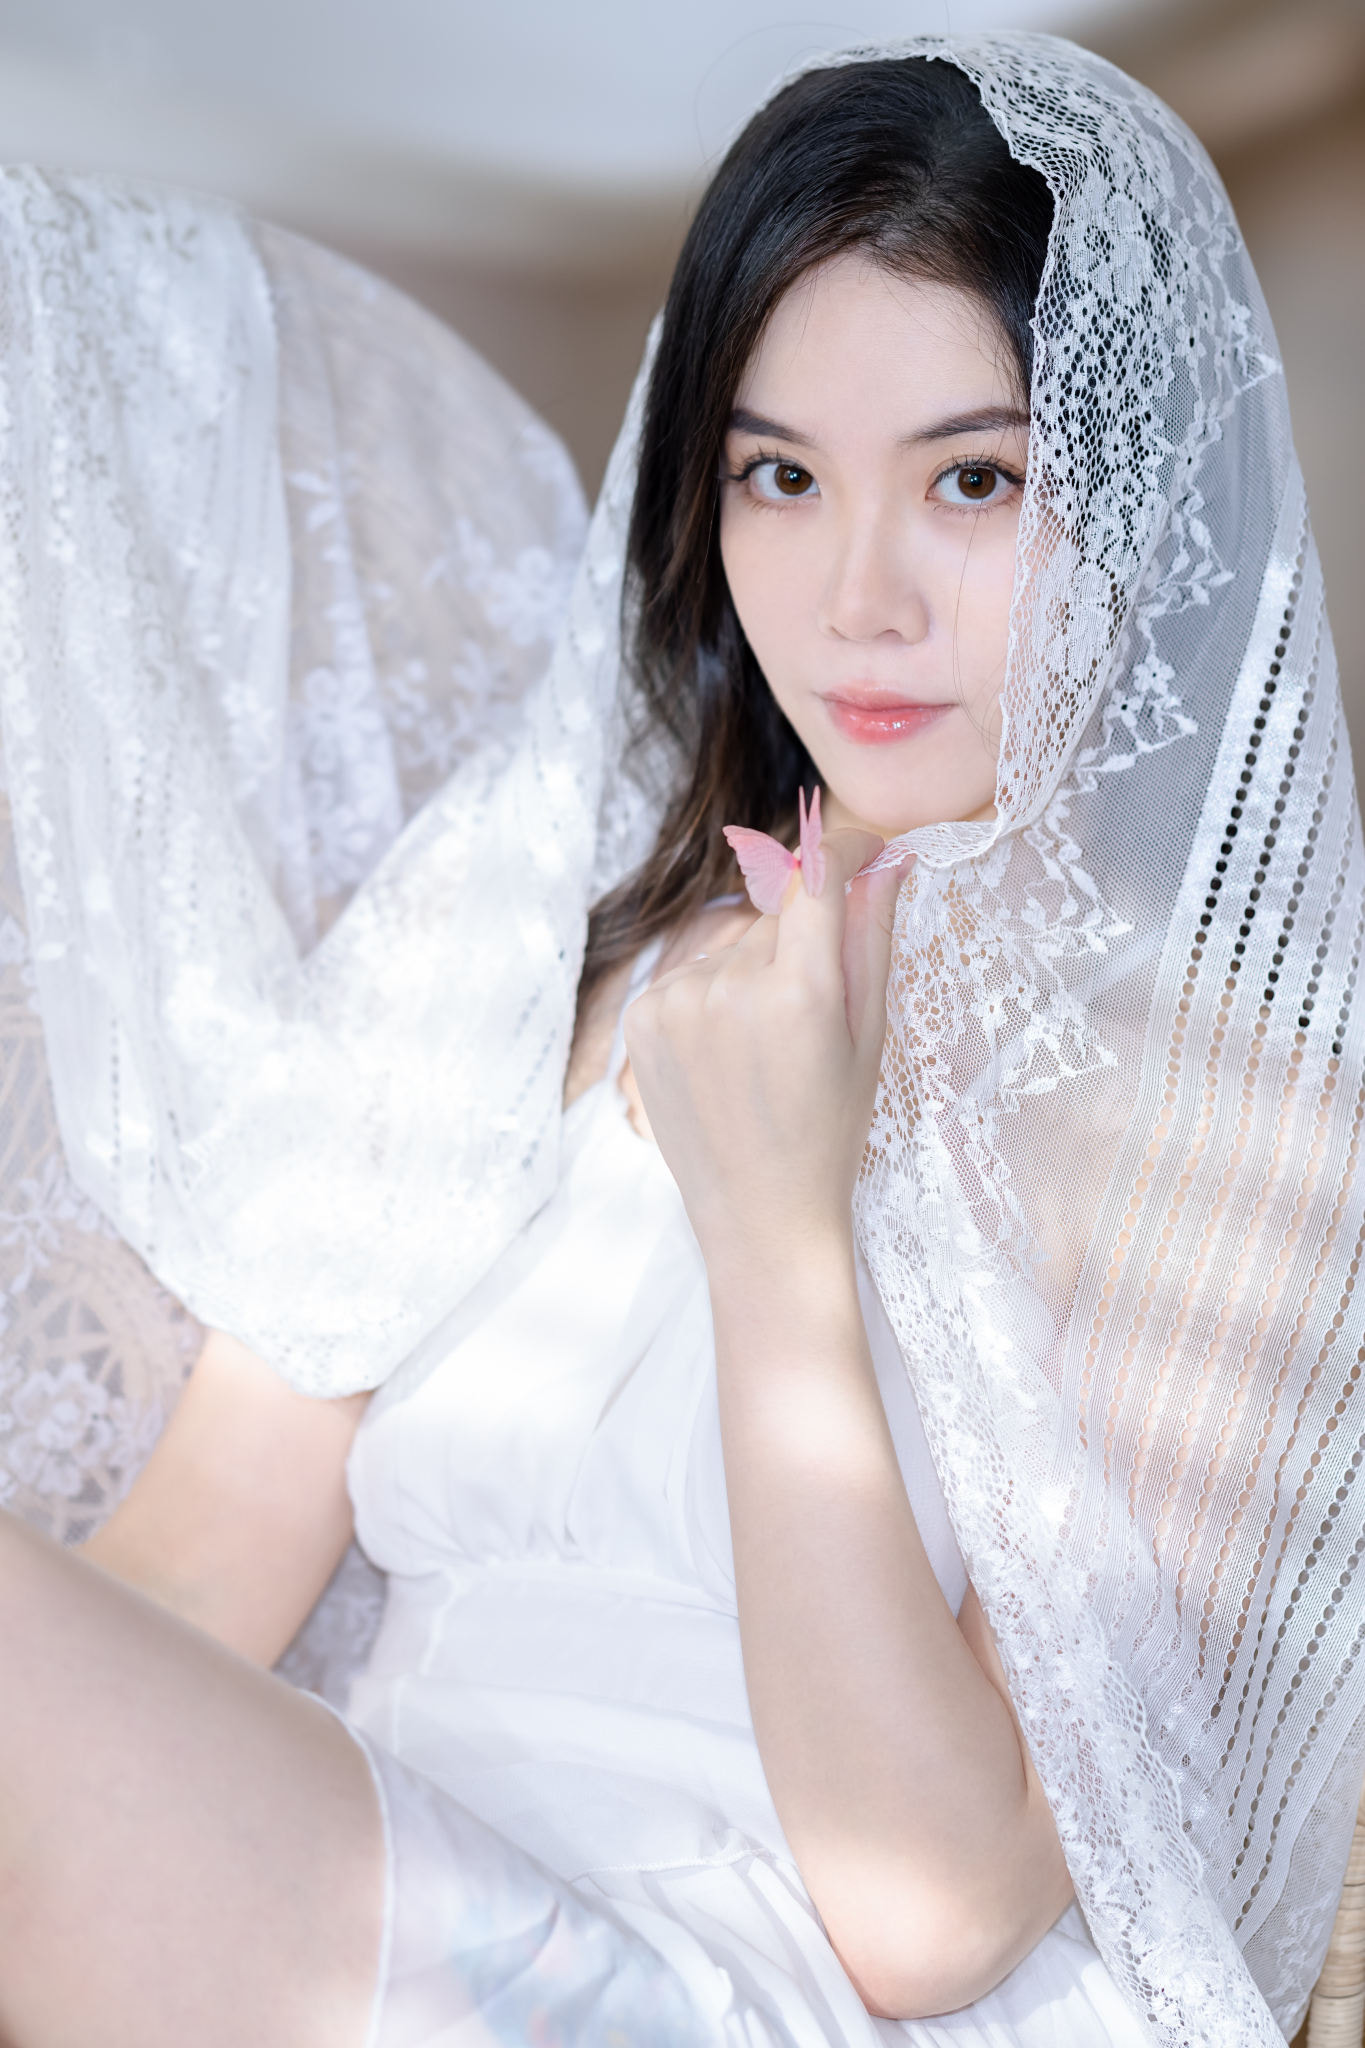 Three Portraits Studio Women Asian Dark Hair Veils Looking At Viewer White Clothing Bright 1365x2048